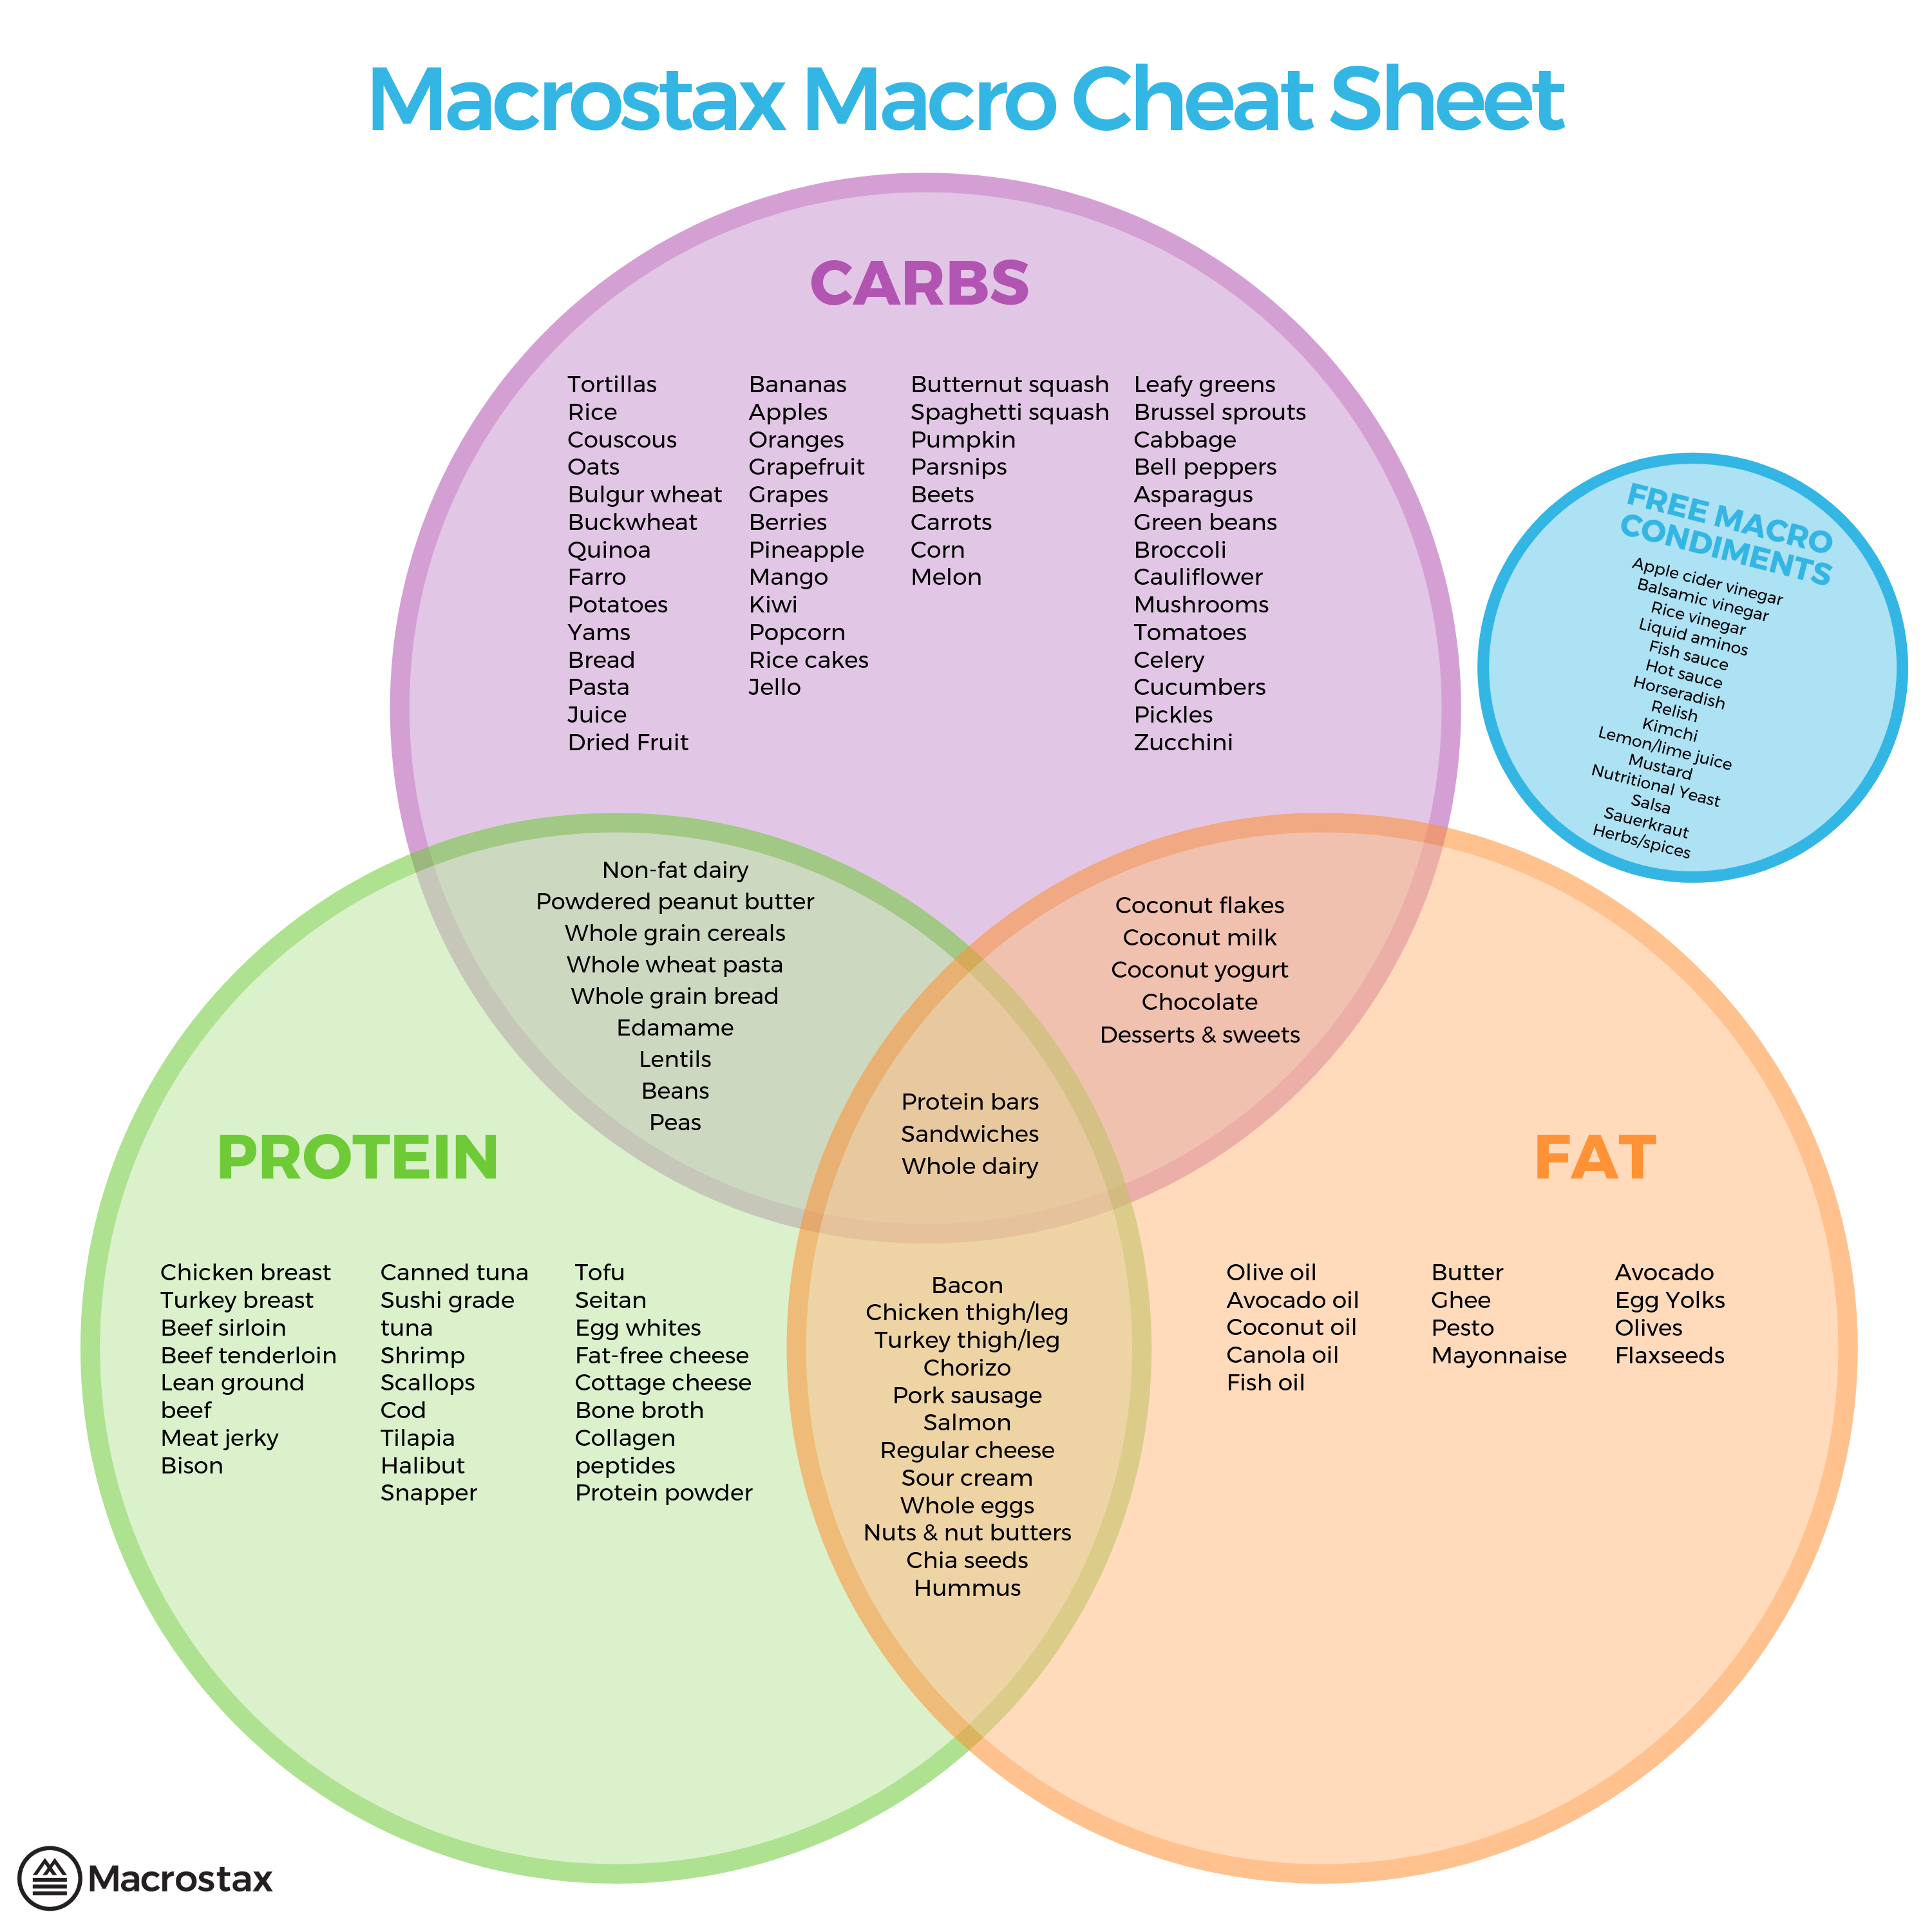 macro meal planning cheat sheet